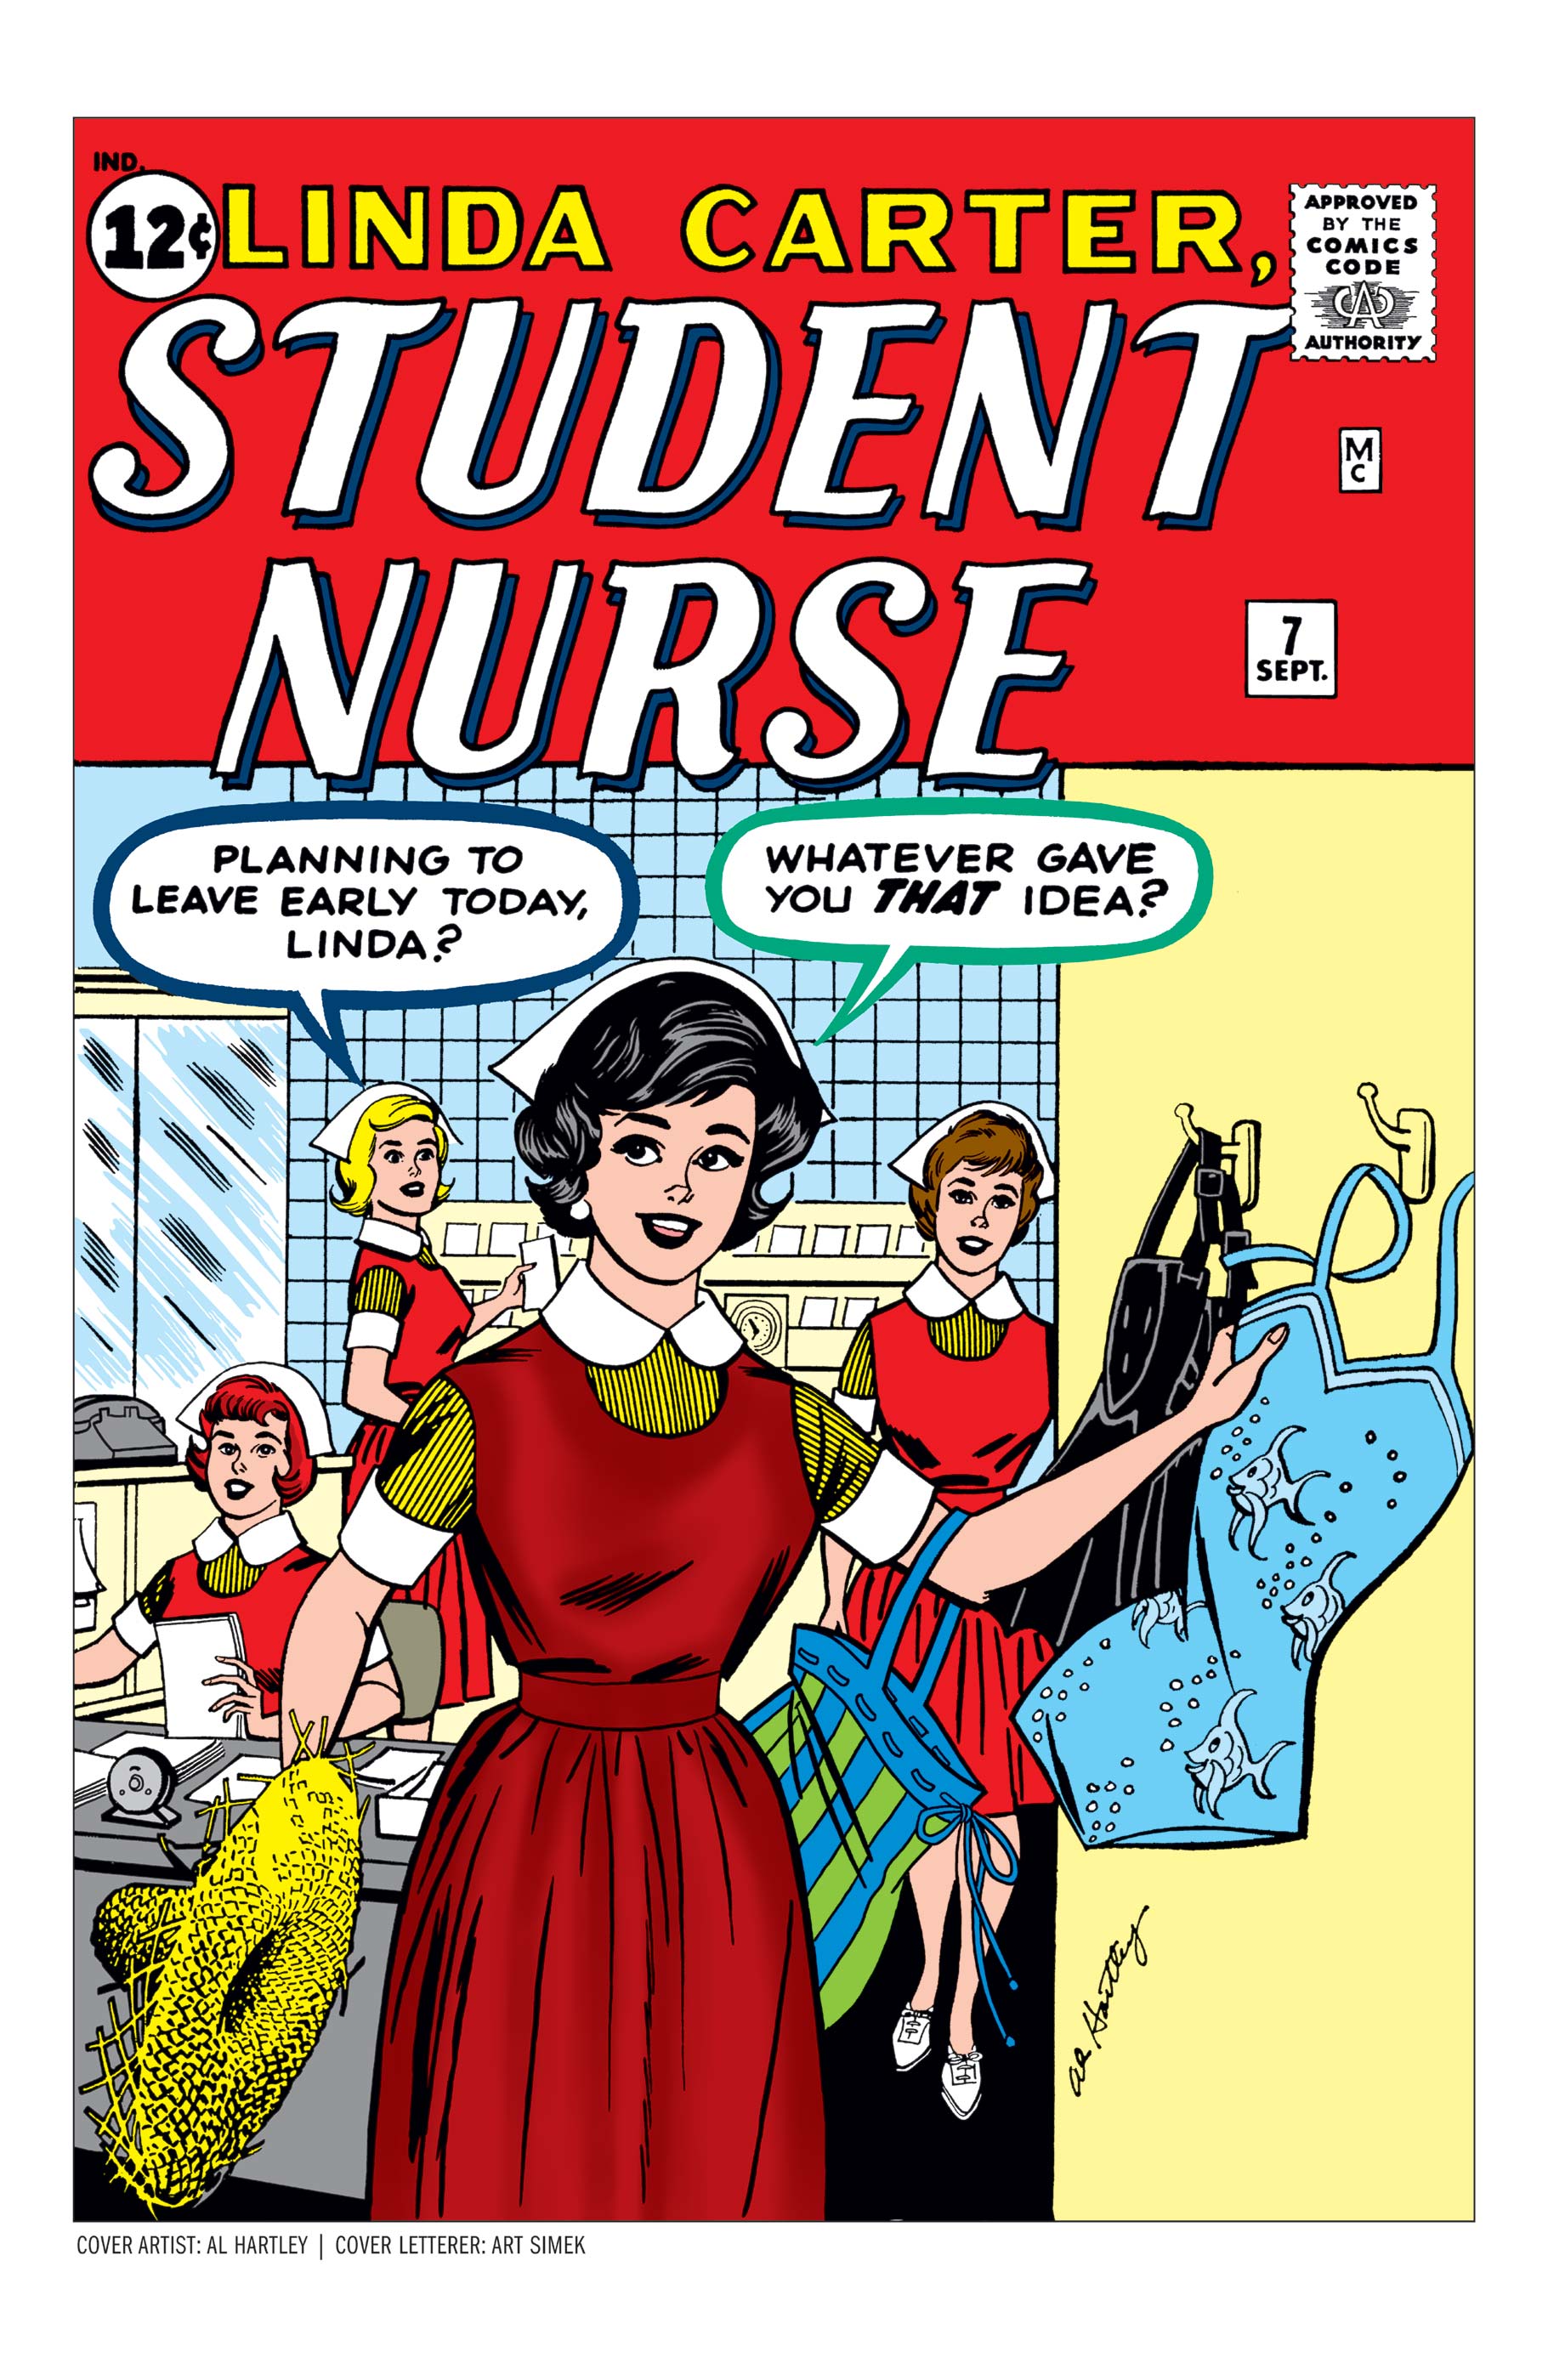 Linda Carter, Student Nurse (1961) #7